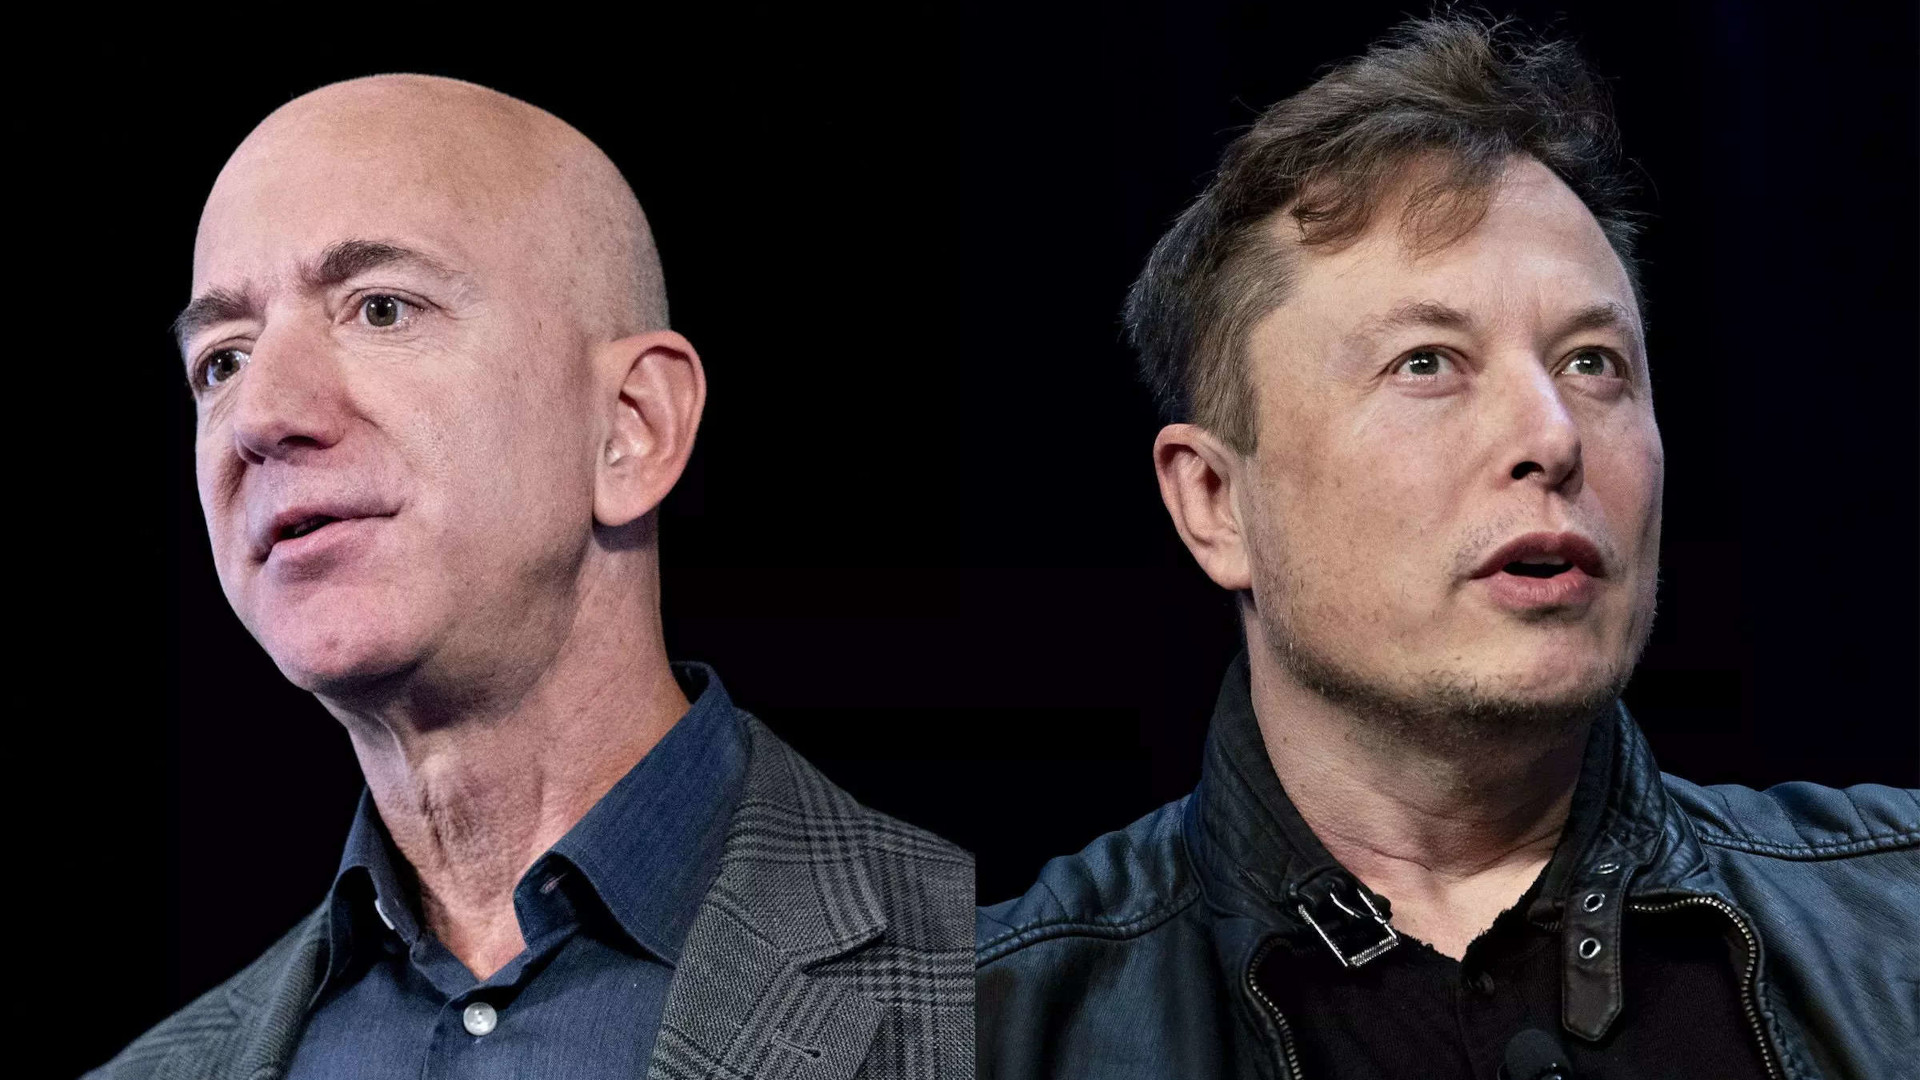 Elon Musk and Jeff Bezos on a black background